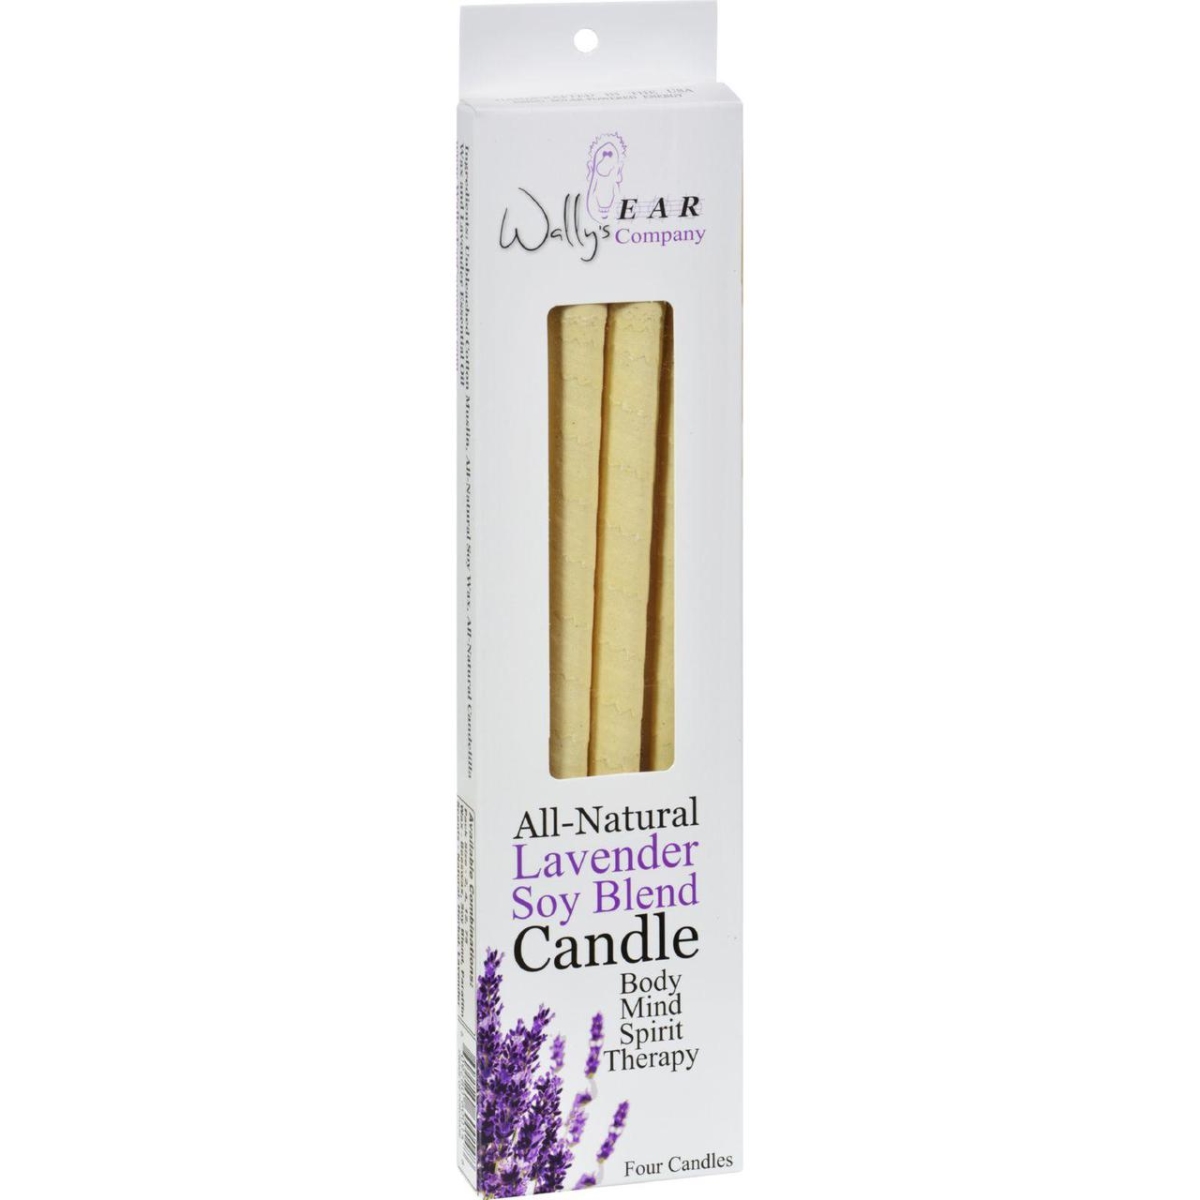 Hg0115899 Ear Candles Lavender Paraffin - 4 Candles